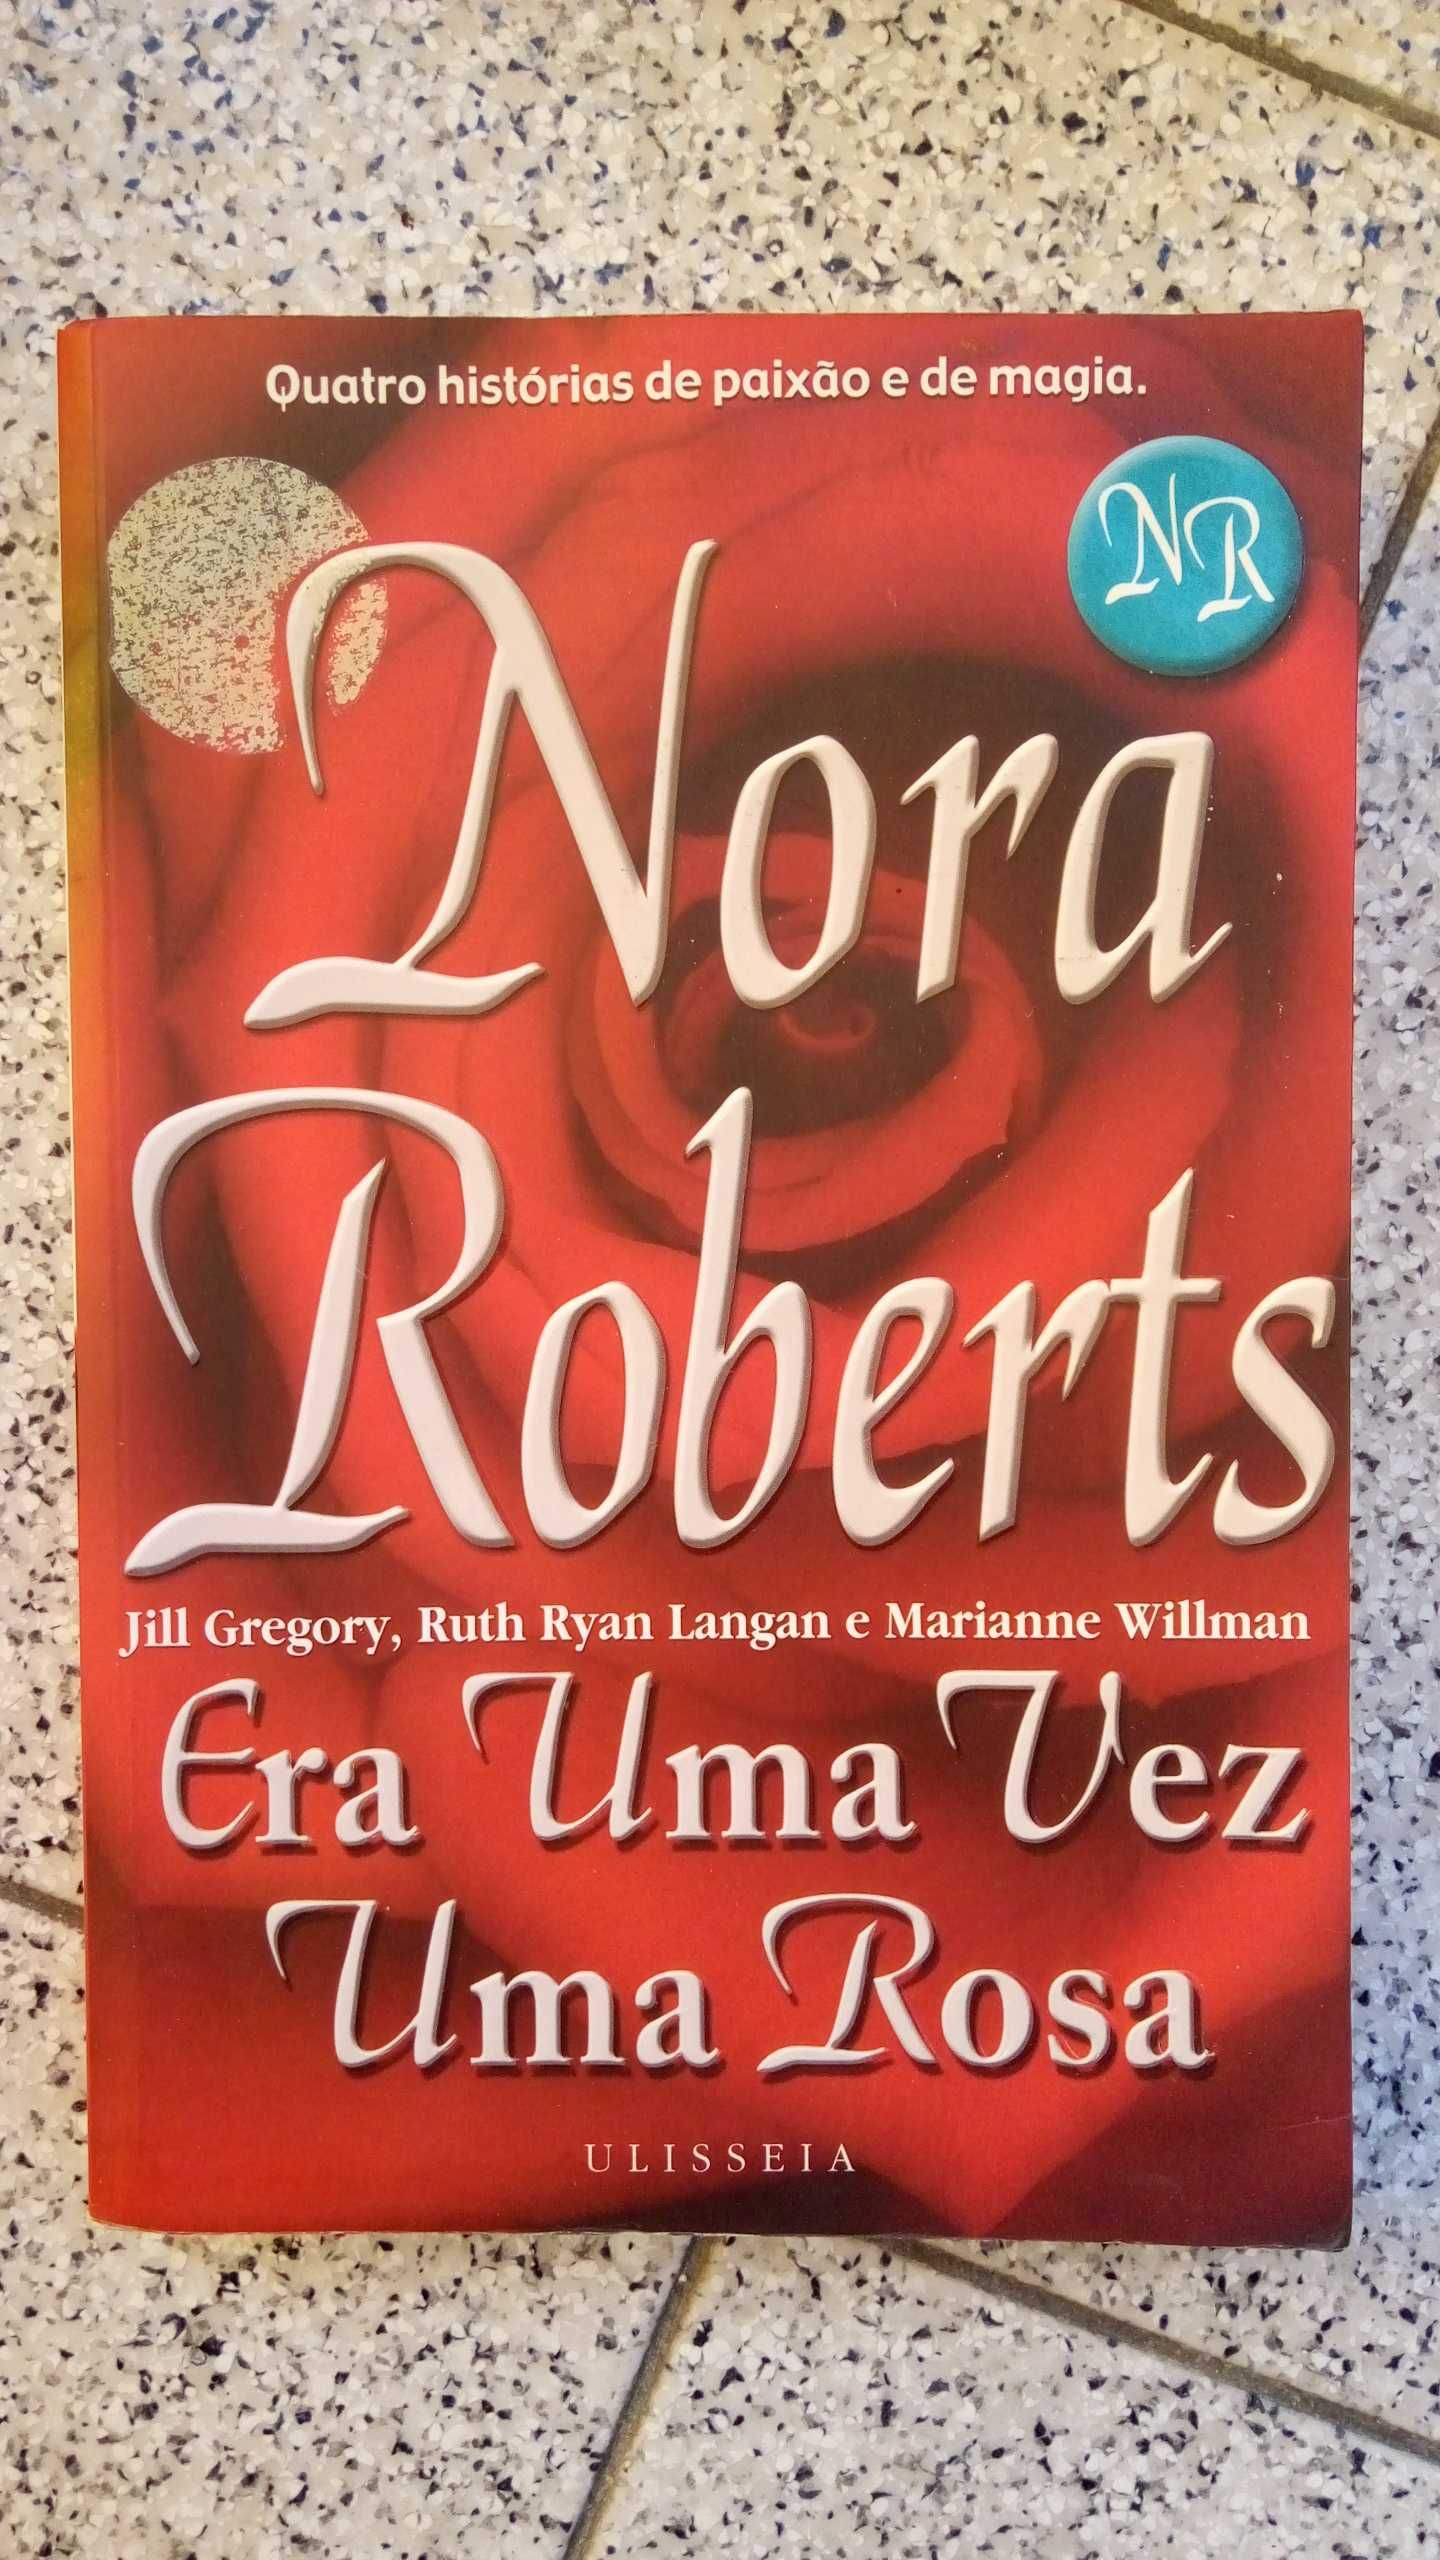 Vários Livros de Romances (Nora Roberts, Danielle Steel, e outros)